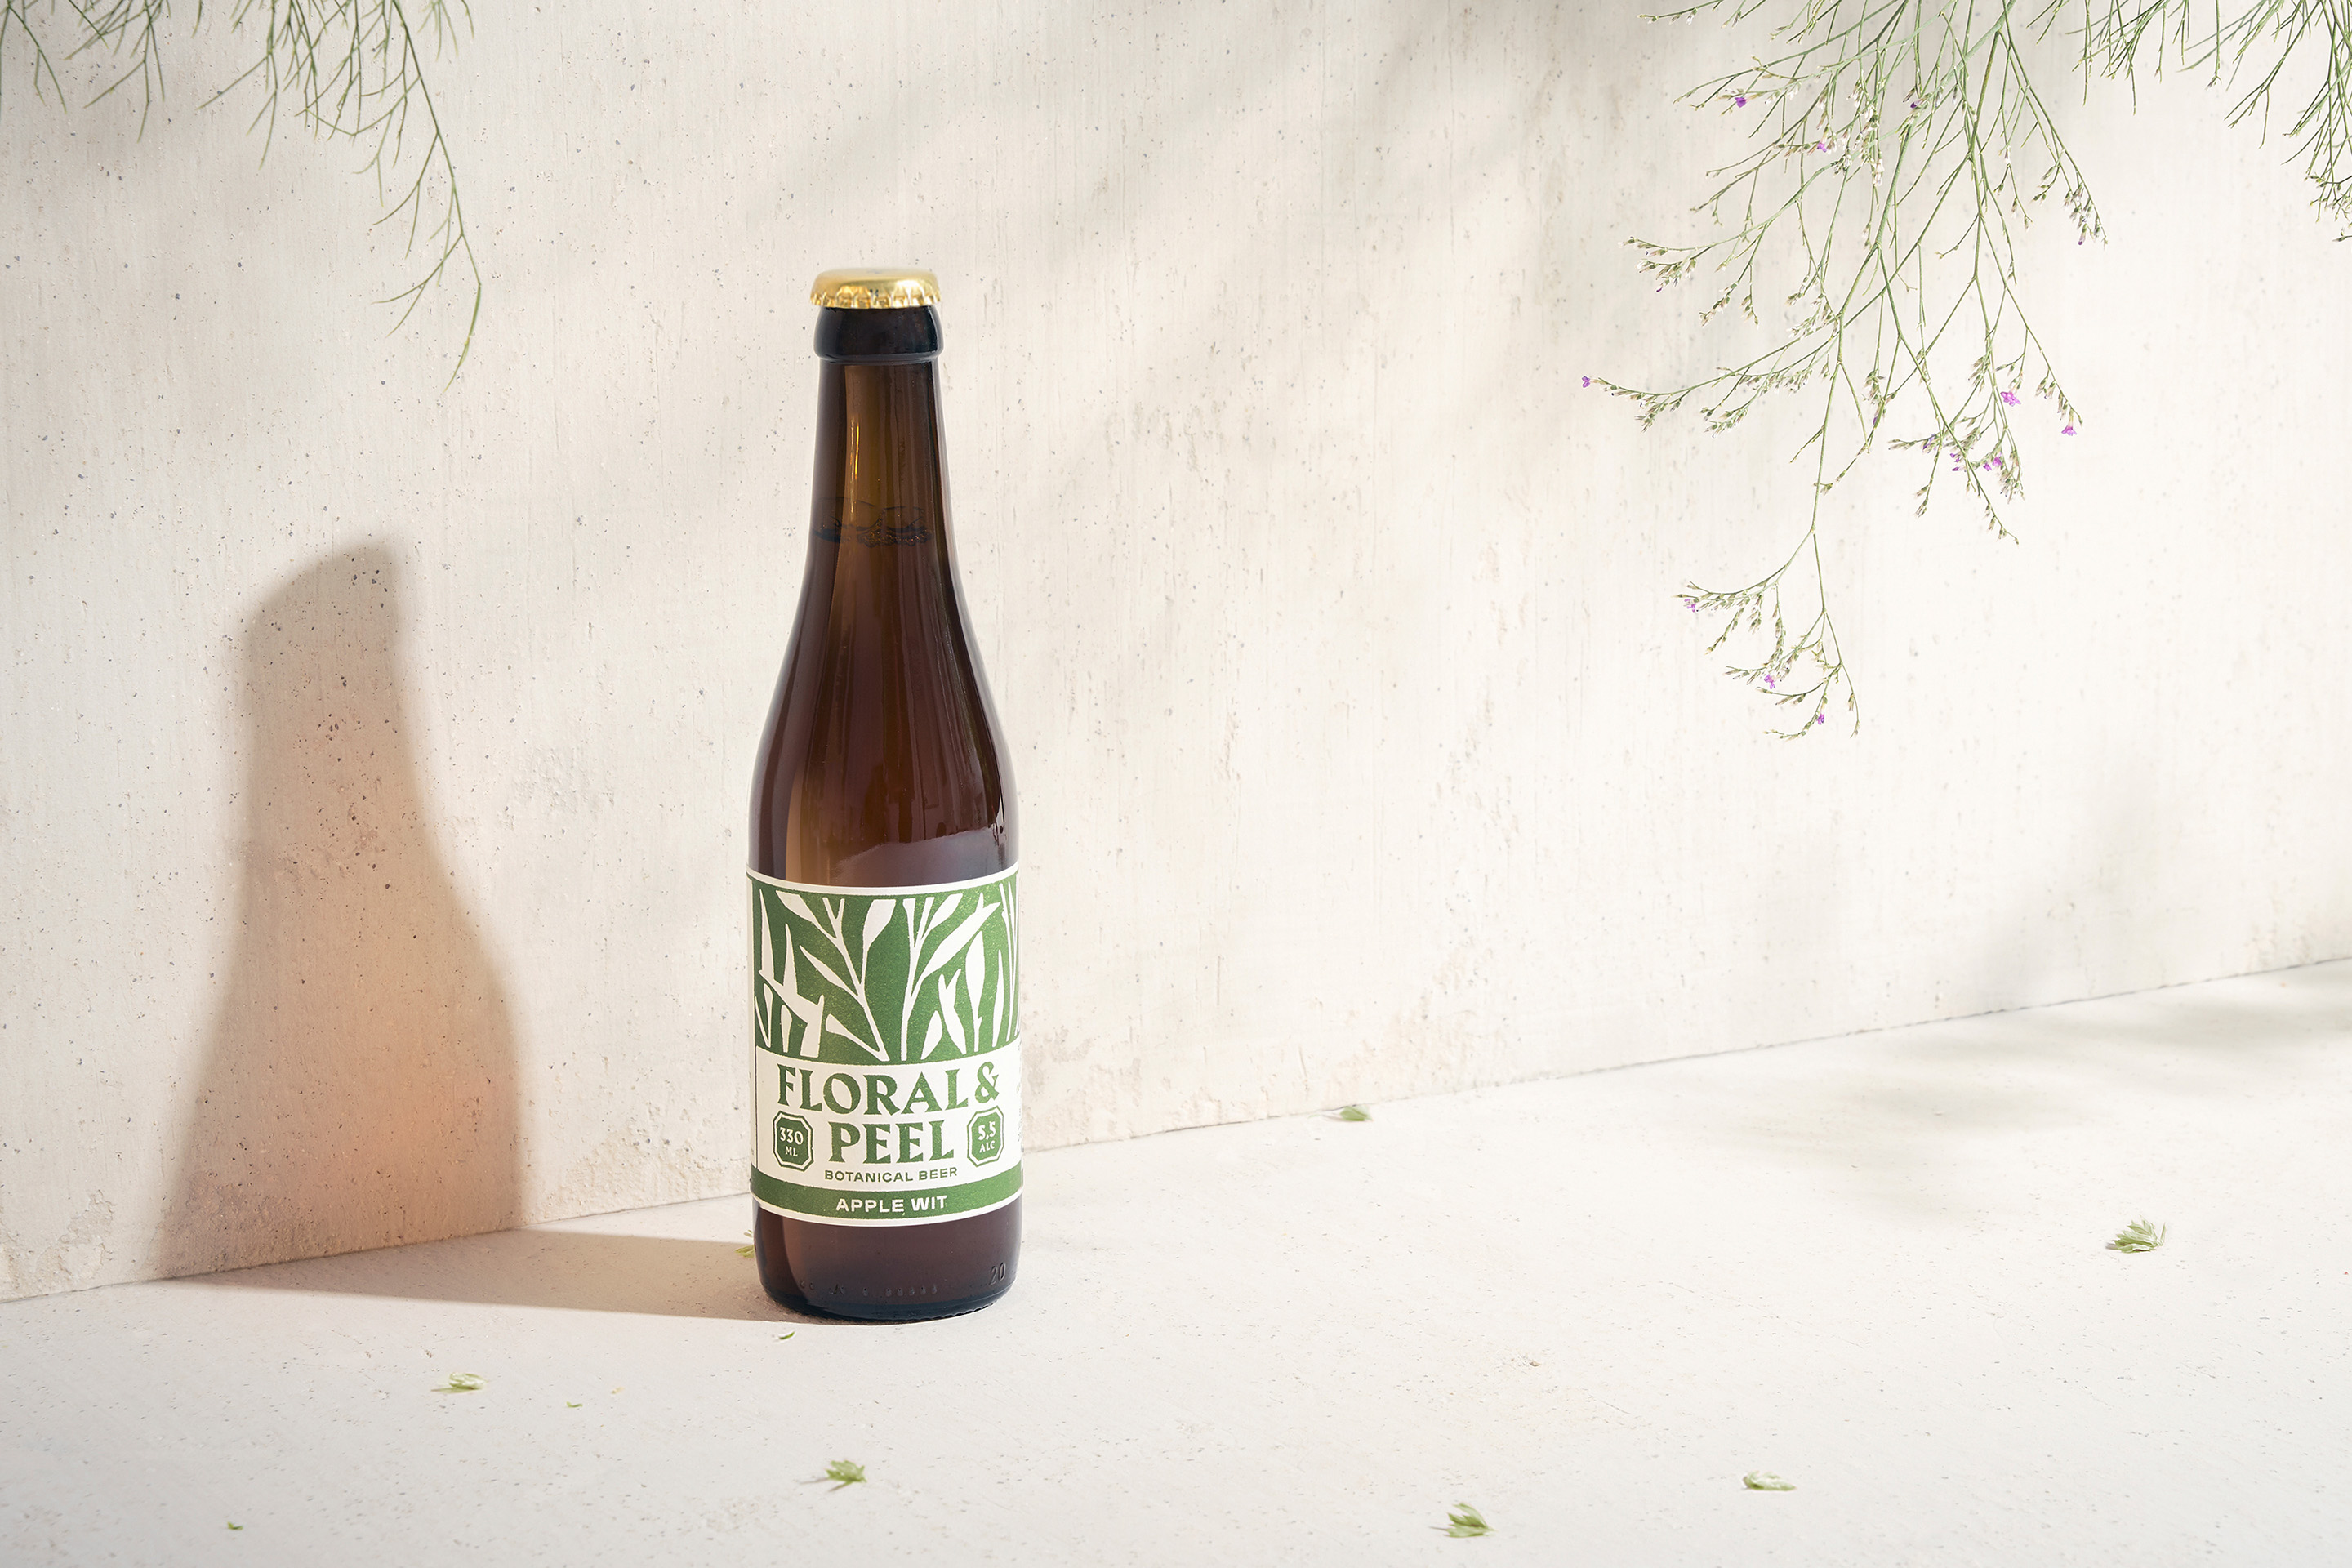 Neumeister packaging design Floral & Peel Apple Wit beer bottle